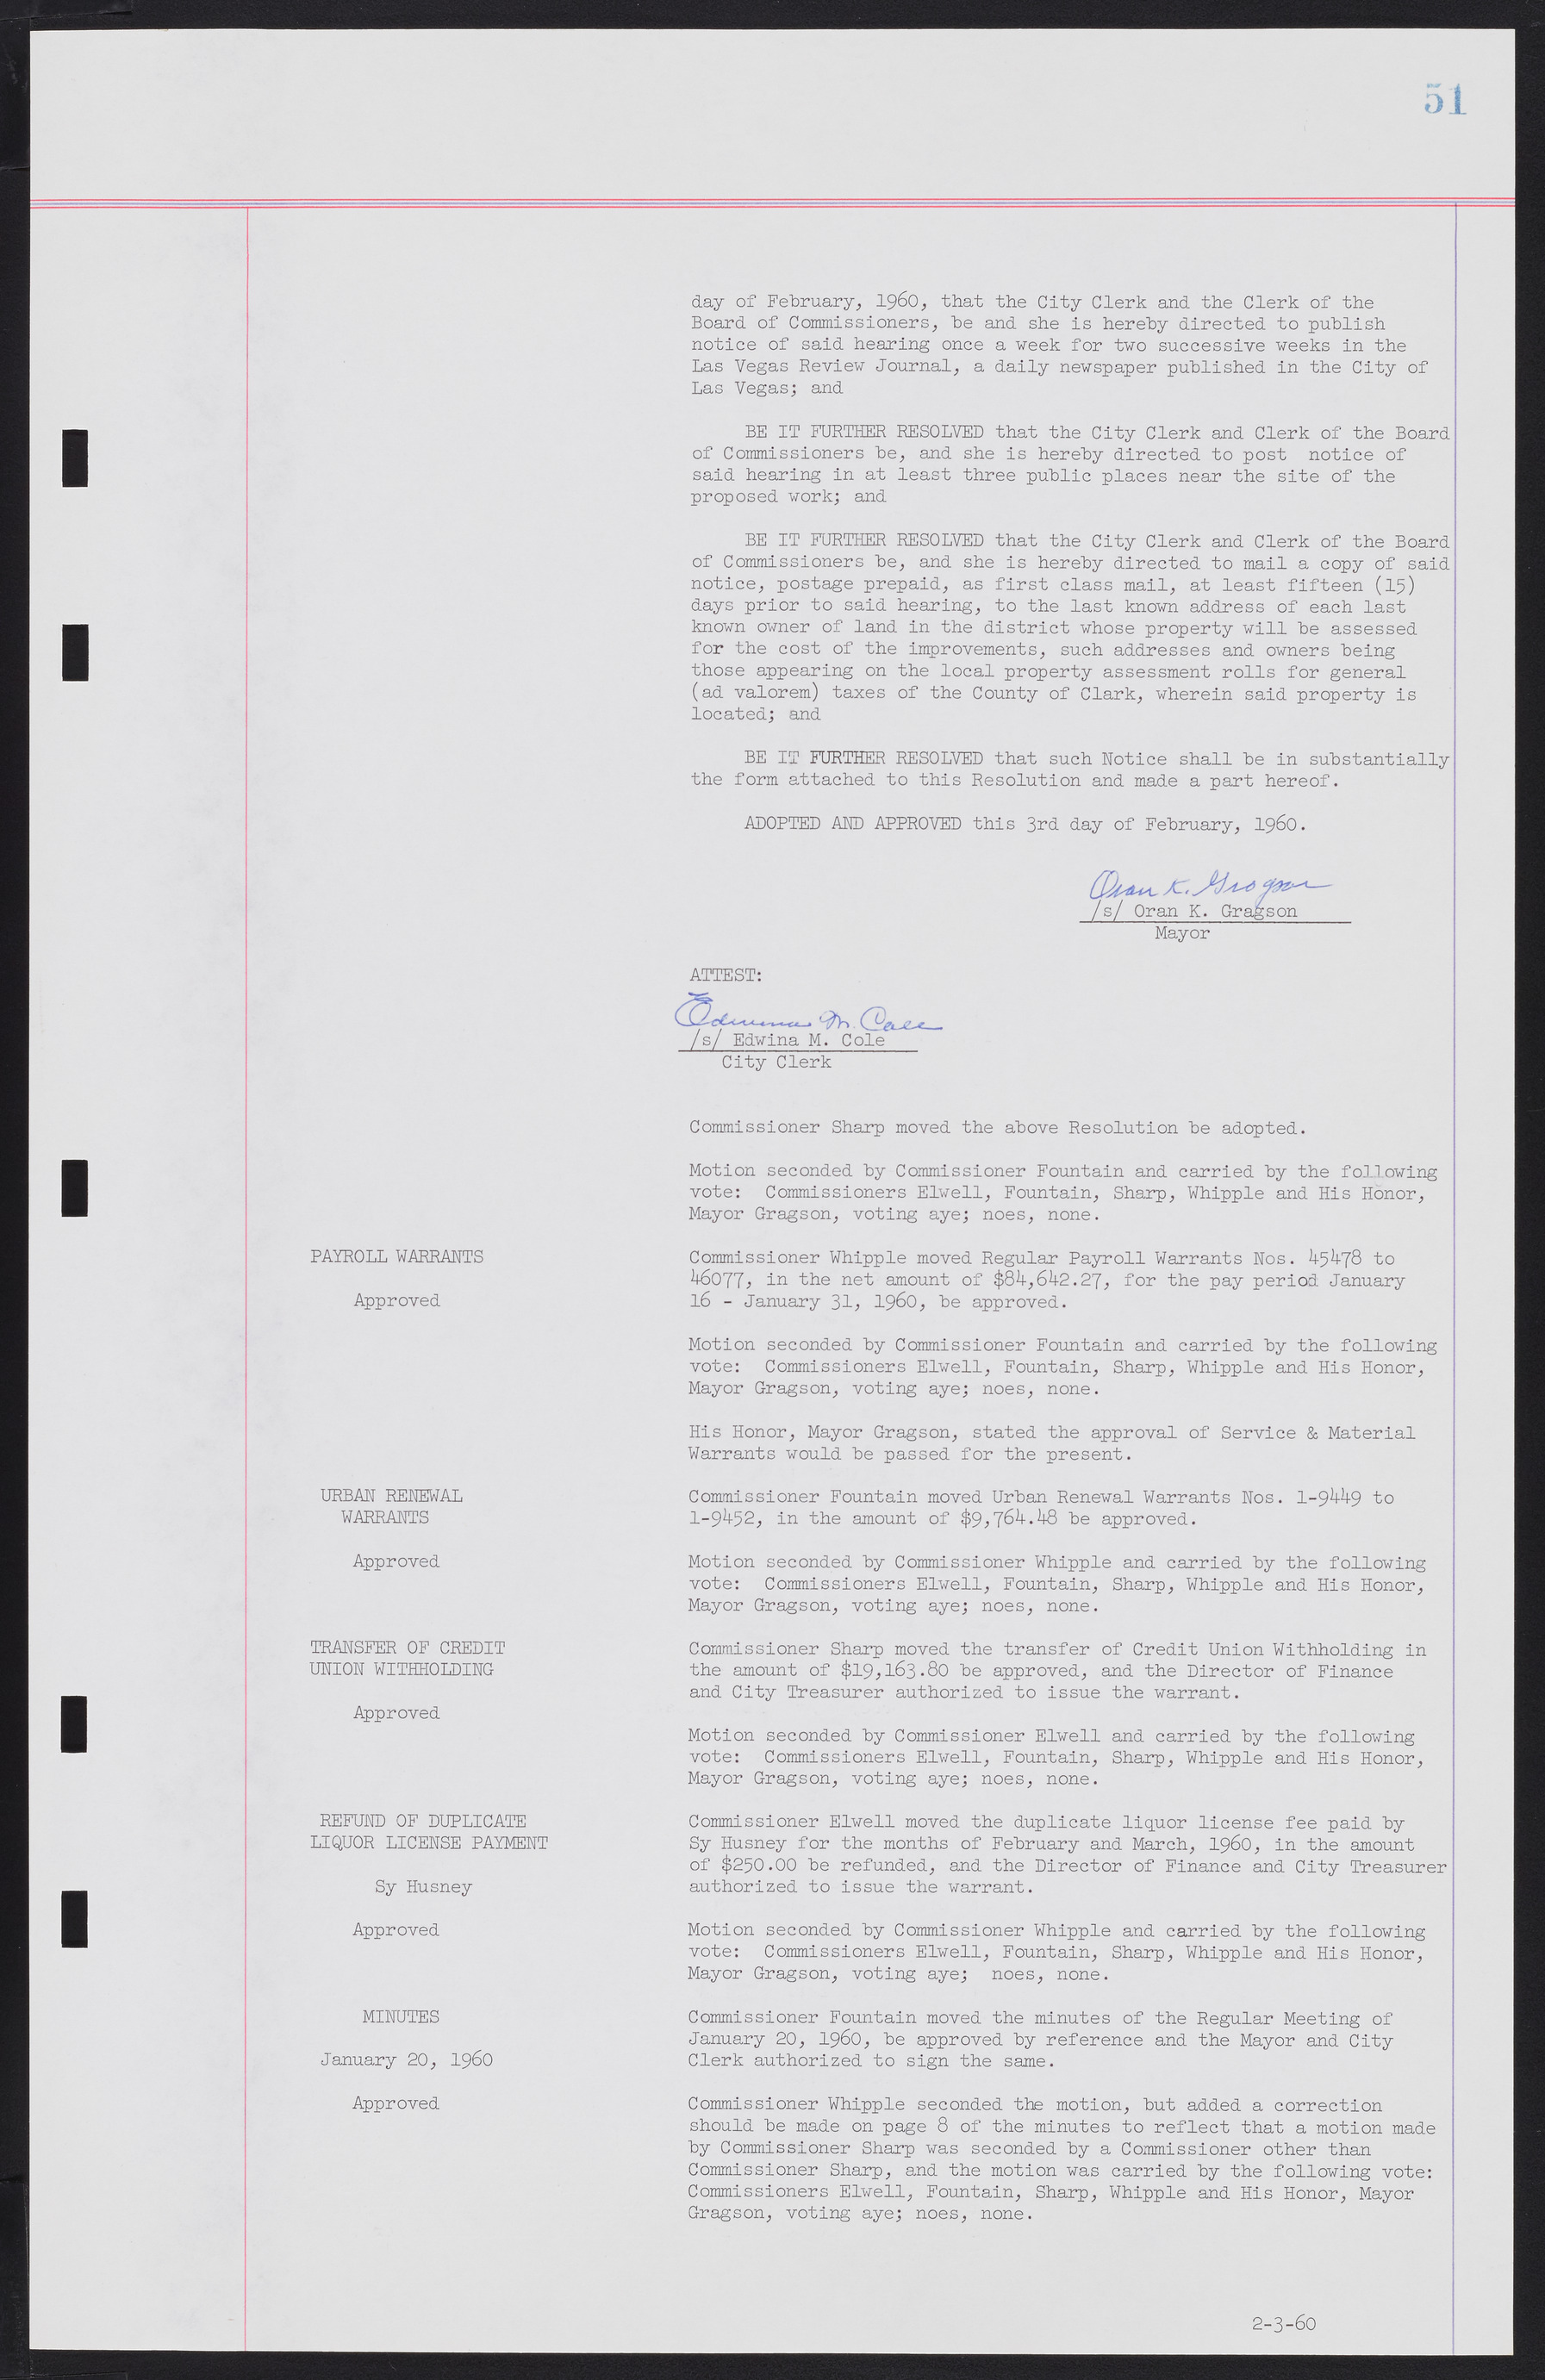 Las Vegas City Commission Minutes, December 8, 1959 to February 17, 1960, lvc000012-55